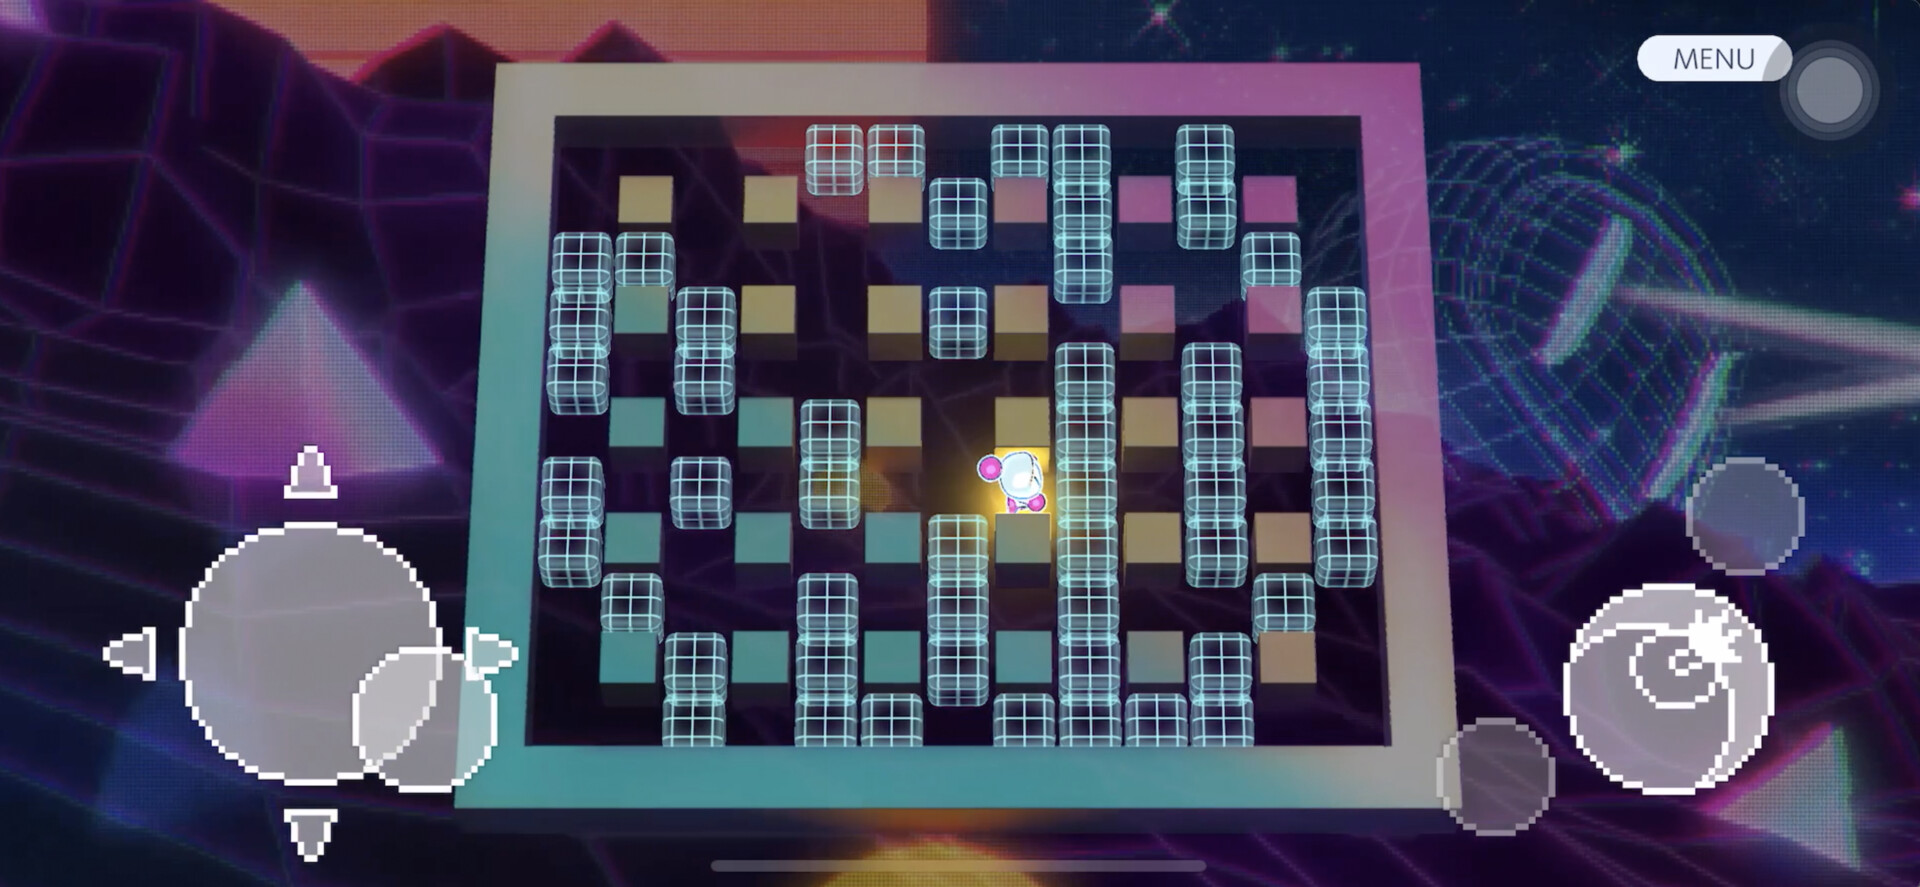 Konami announces new music-driven Bomberman game for Apple Arcade - Polygon